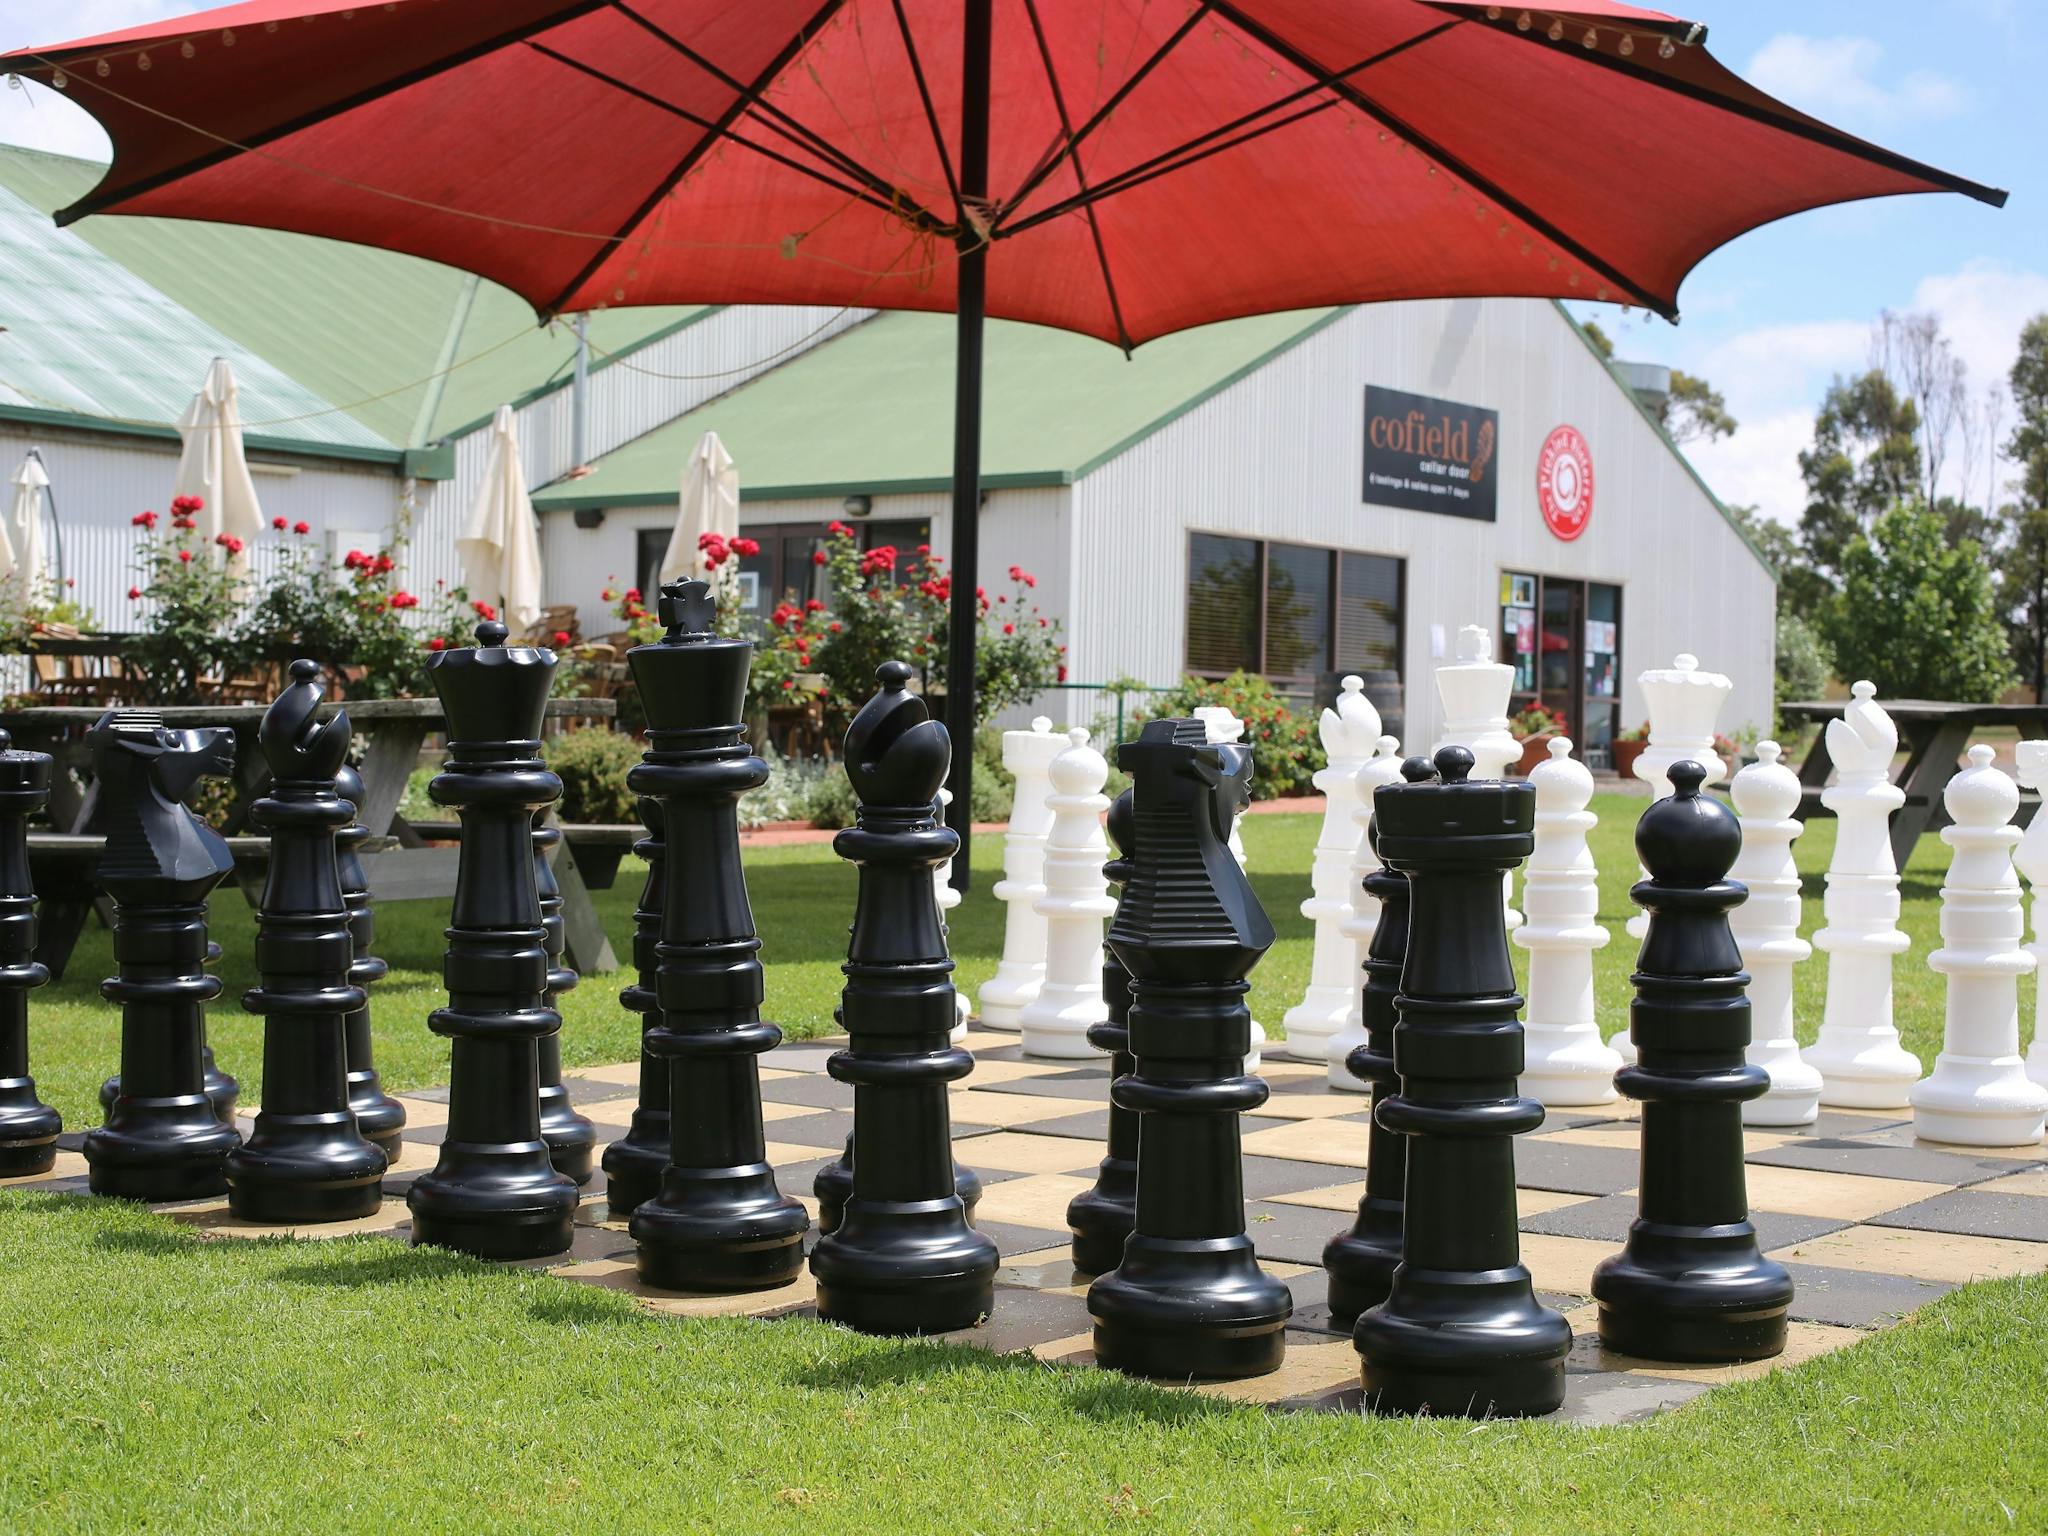 Cofield Wines Chess Board